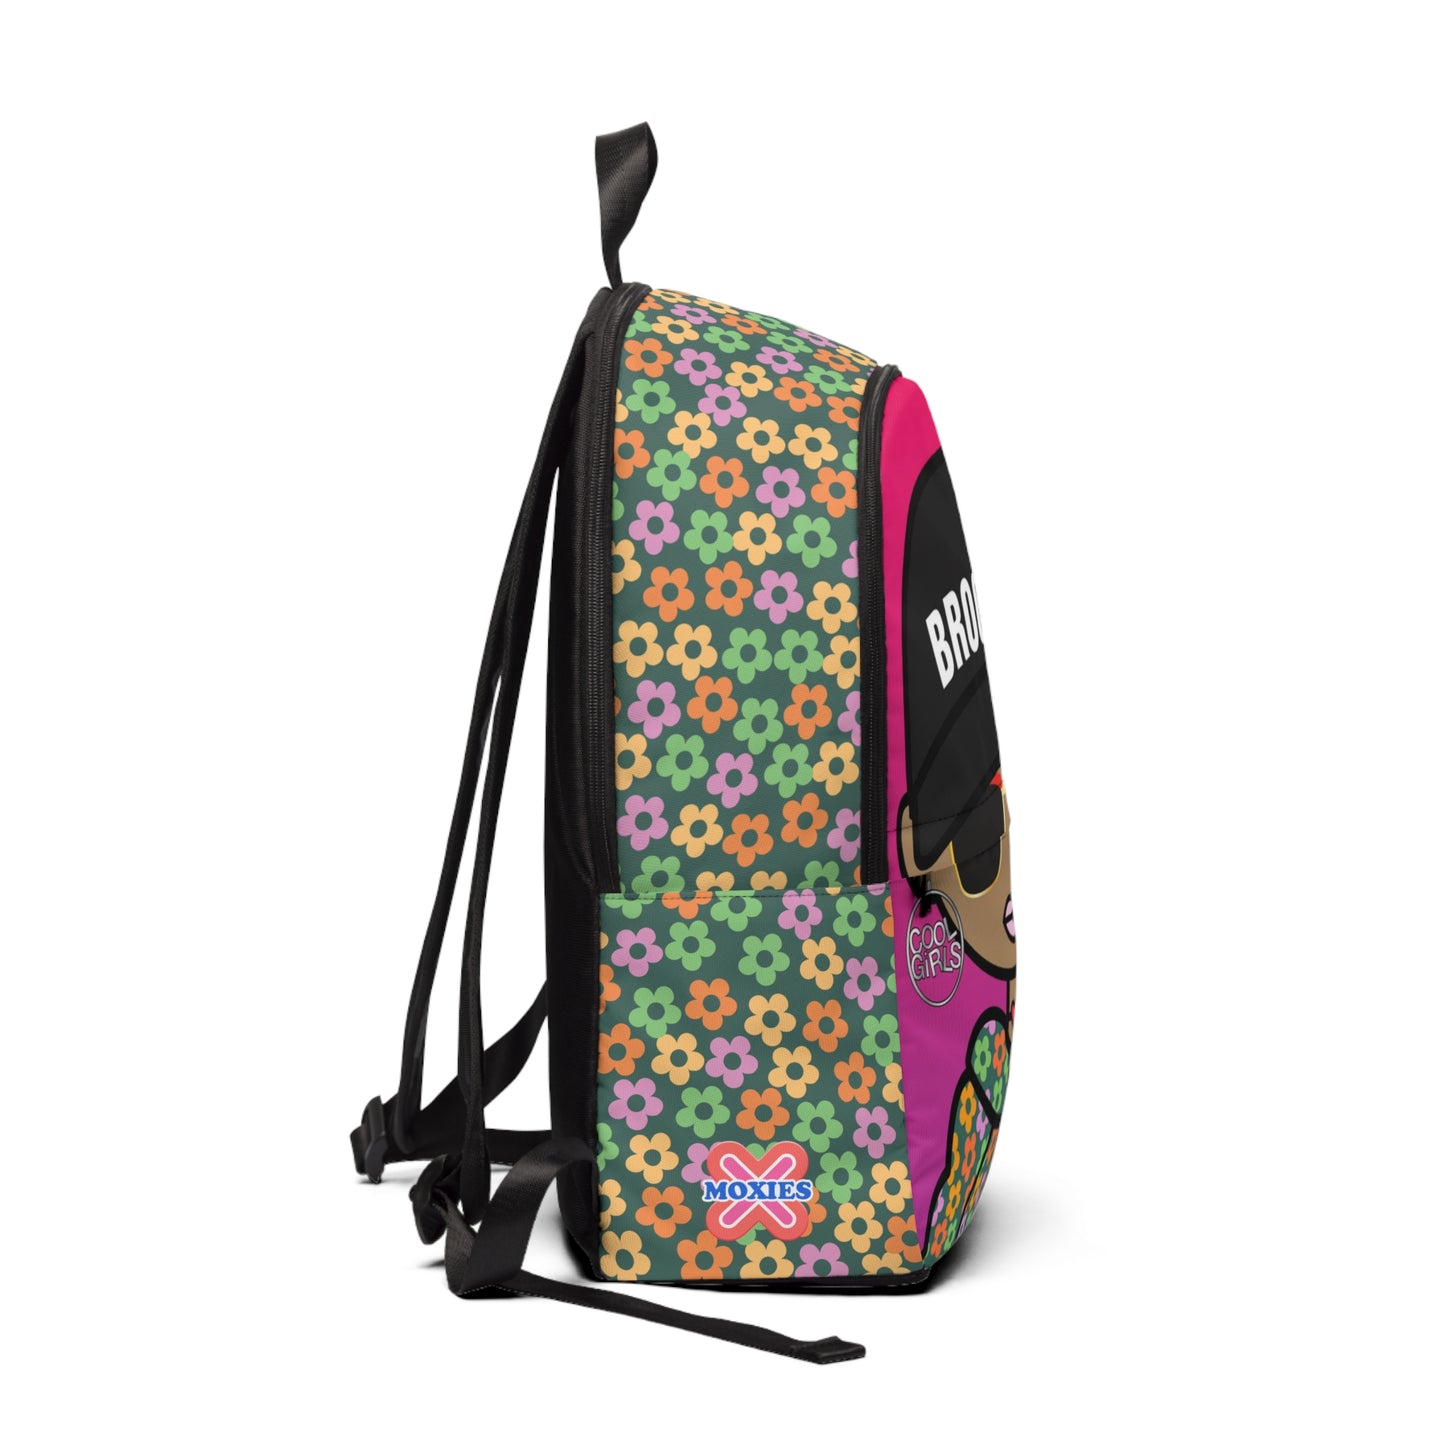 The Zoe Backpack